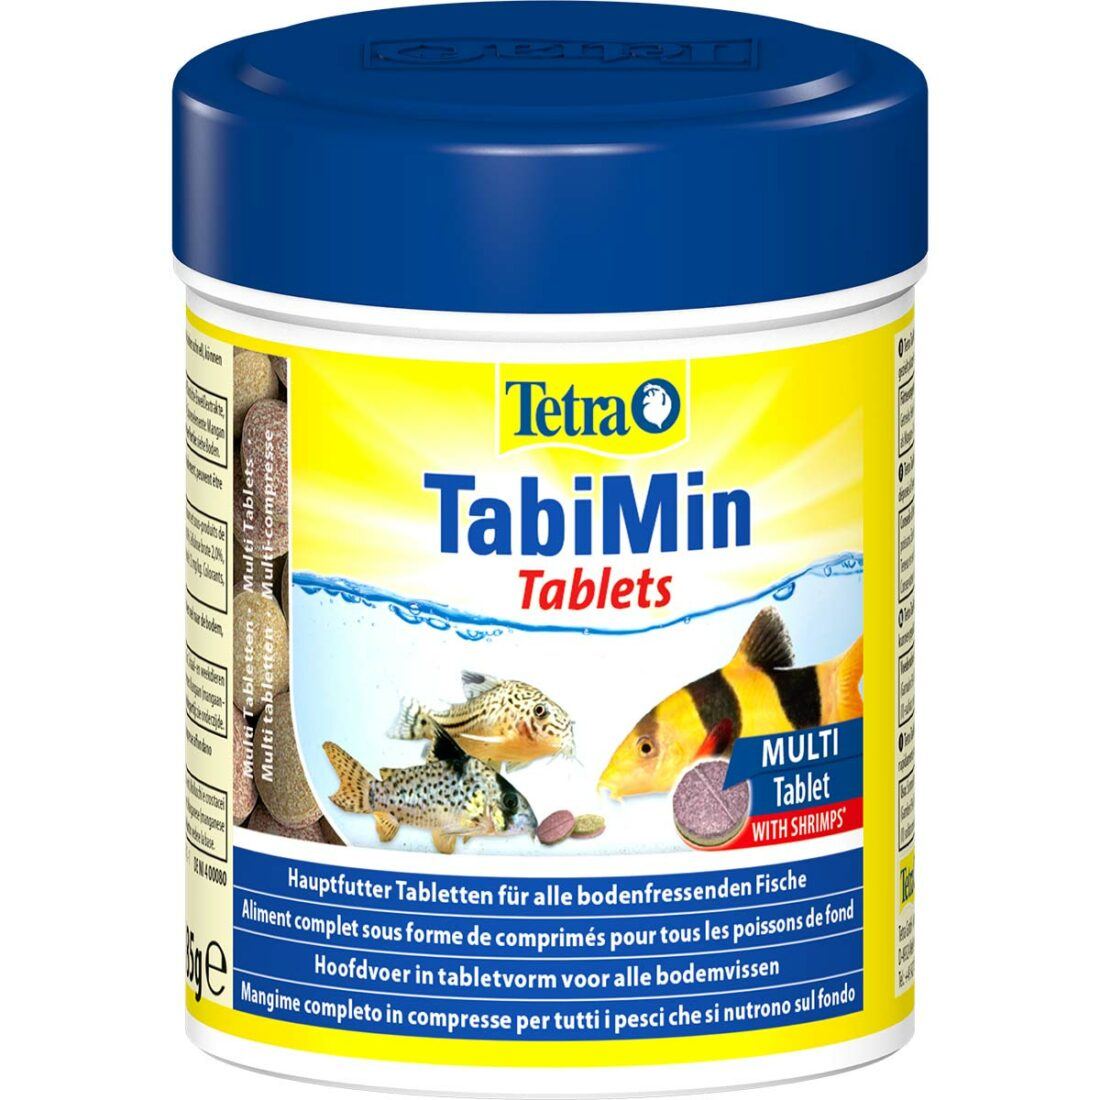 Tetra Tablets TabiMin tabletové